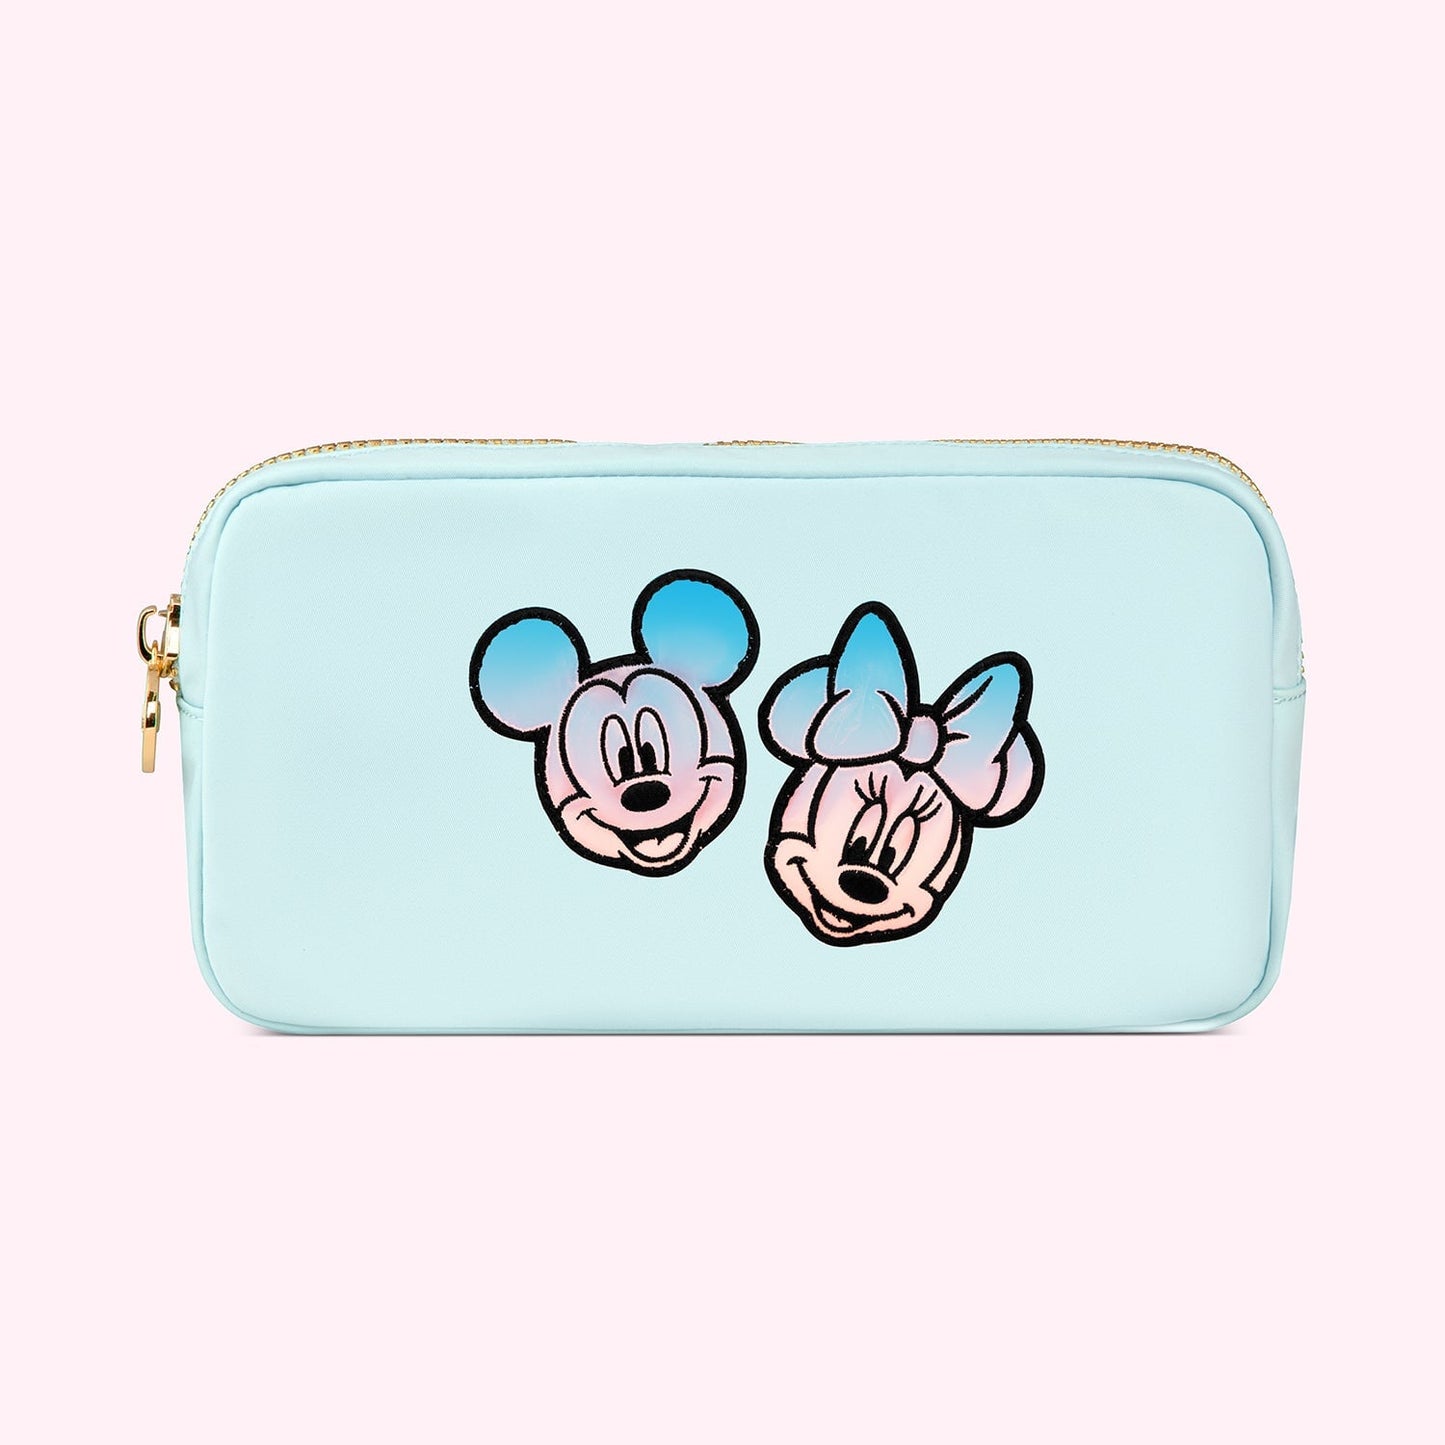 Iridescent Disney Mickey & Minnie Small Pouch